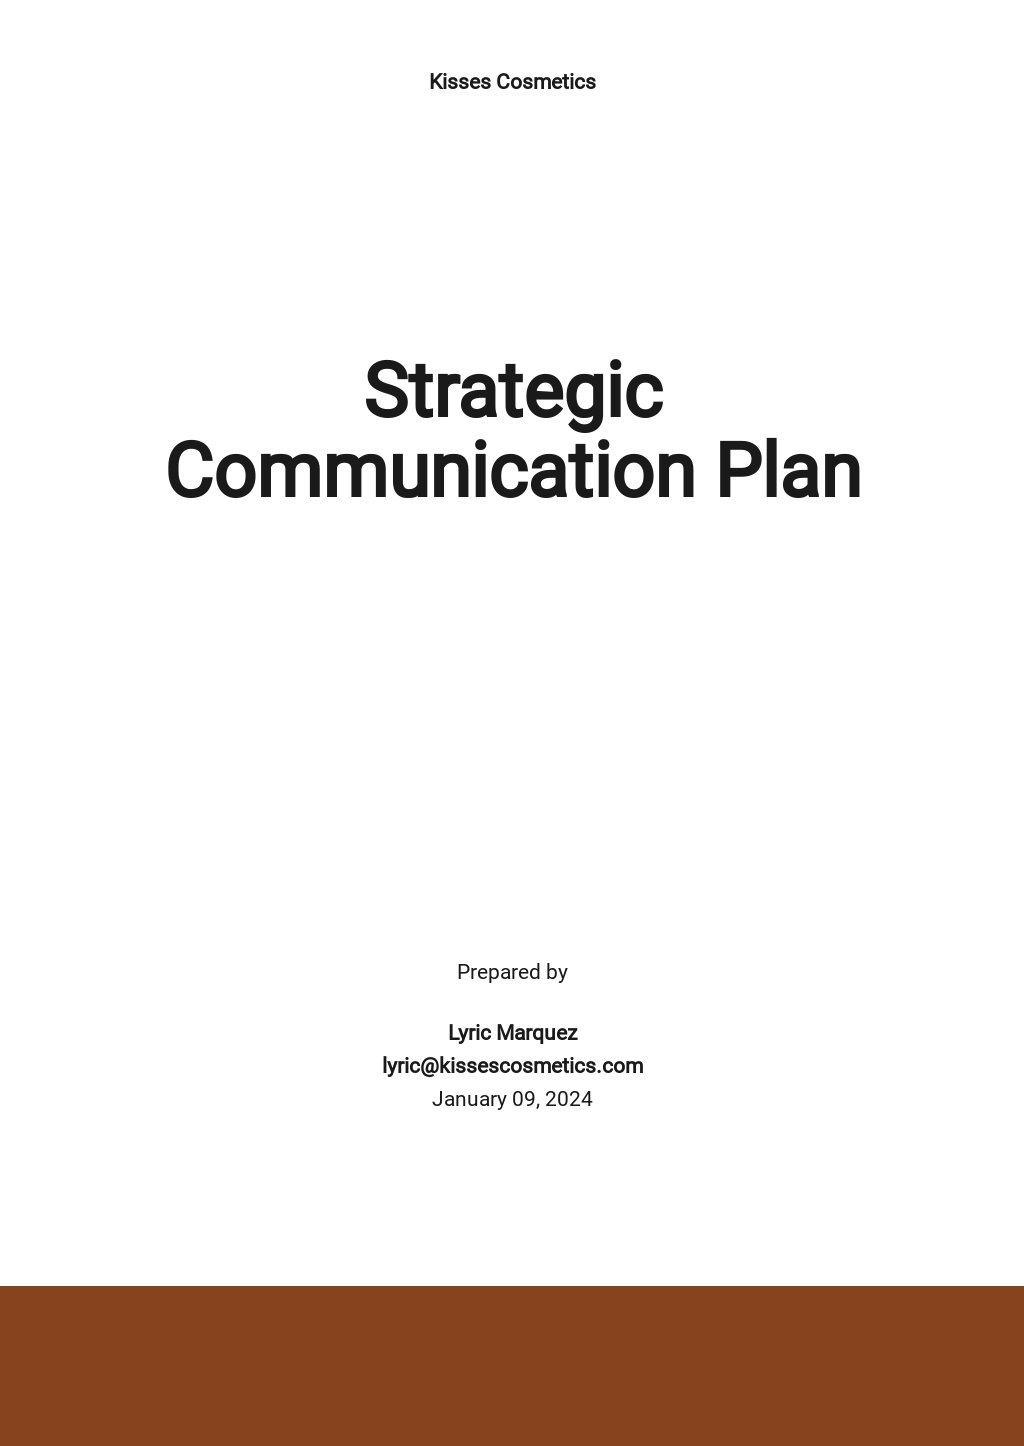 Strategic Communication Plan Template.jpe